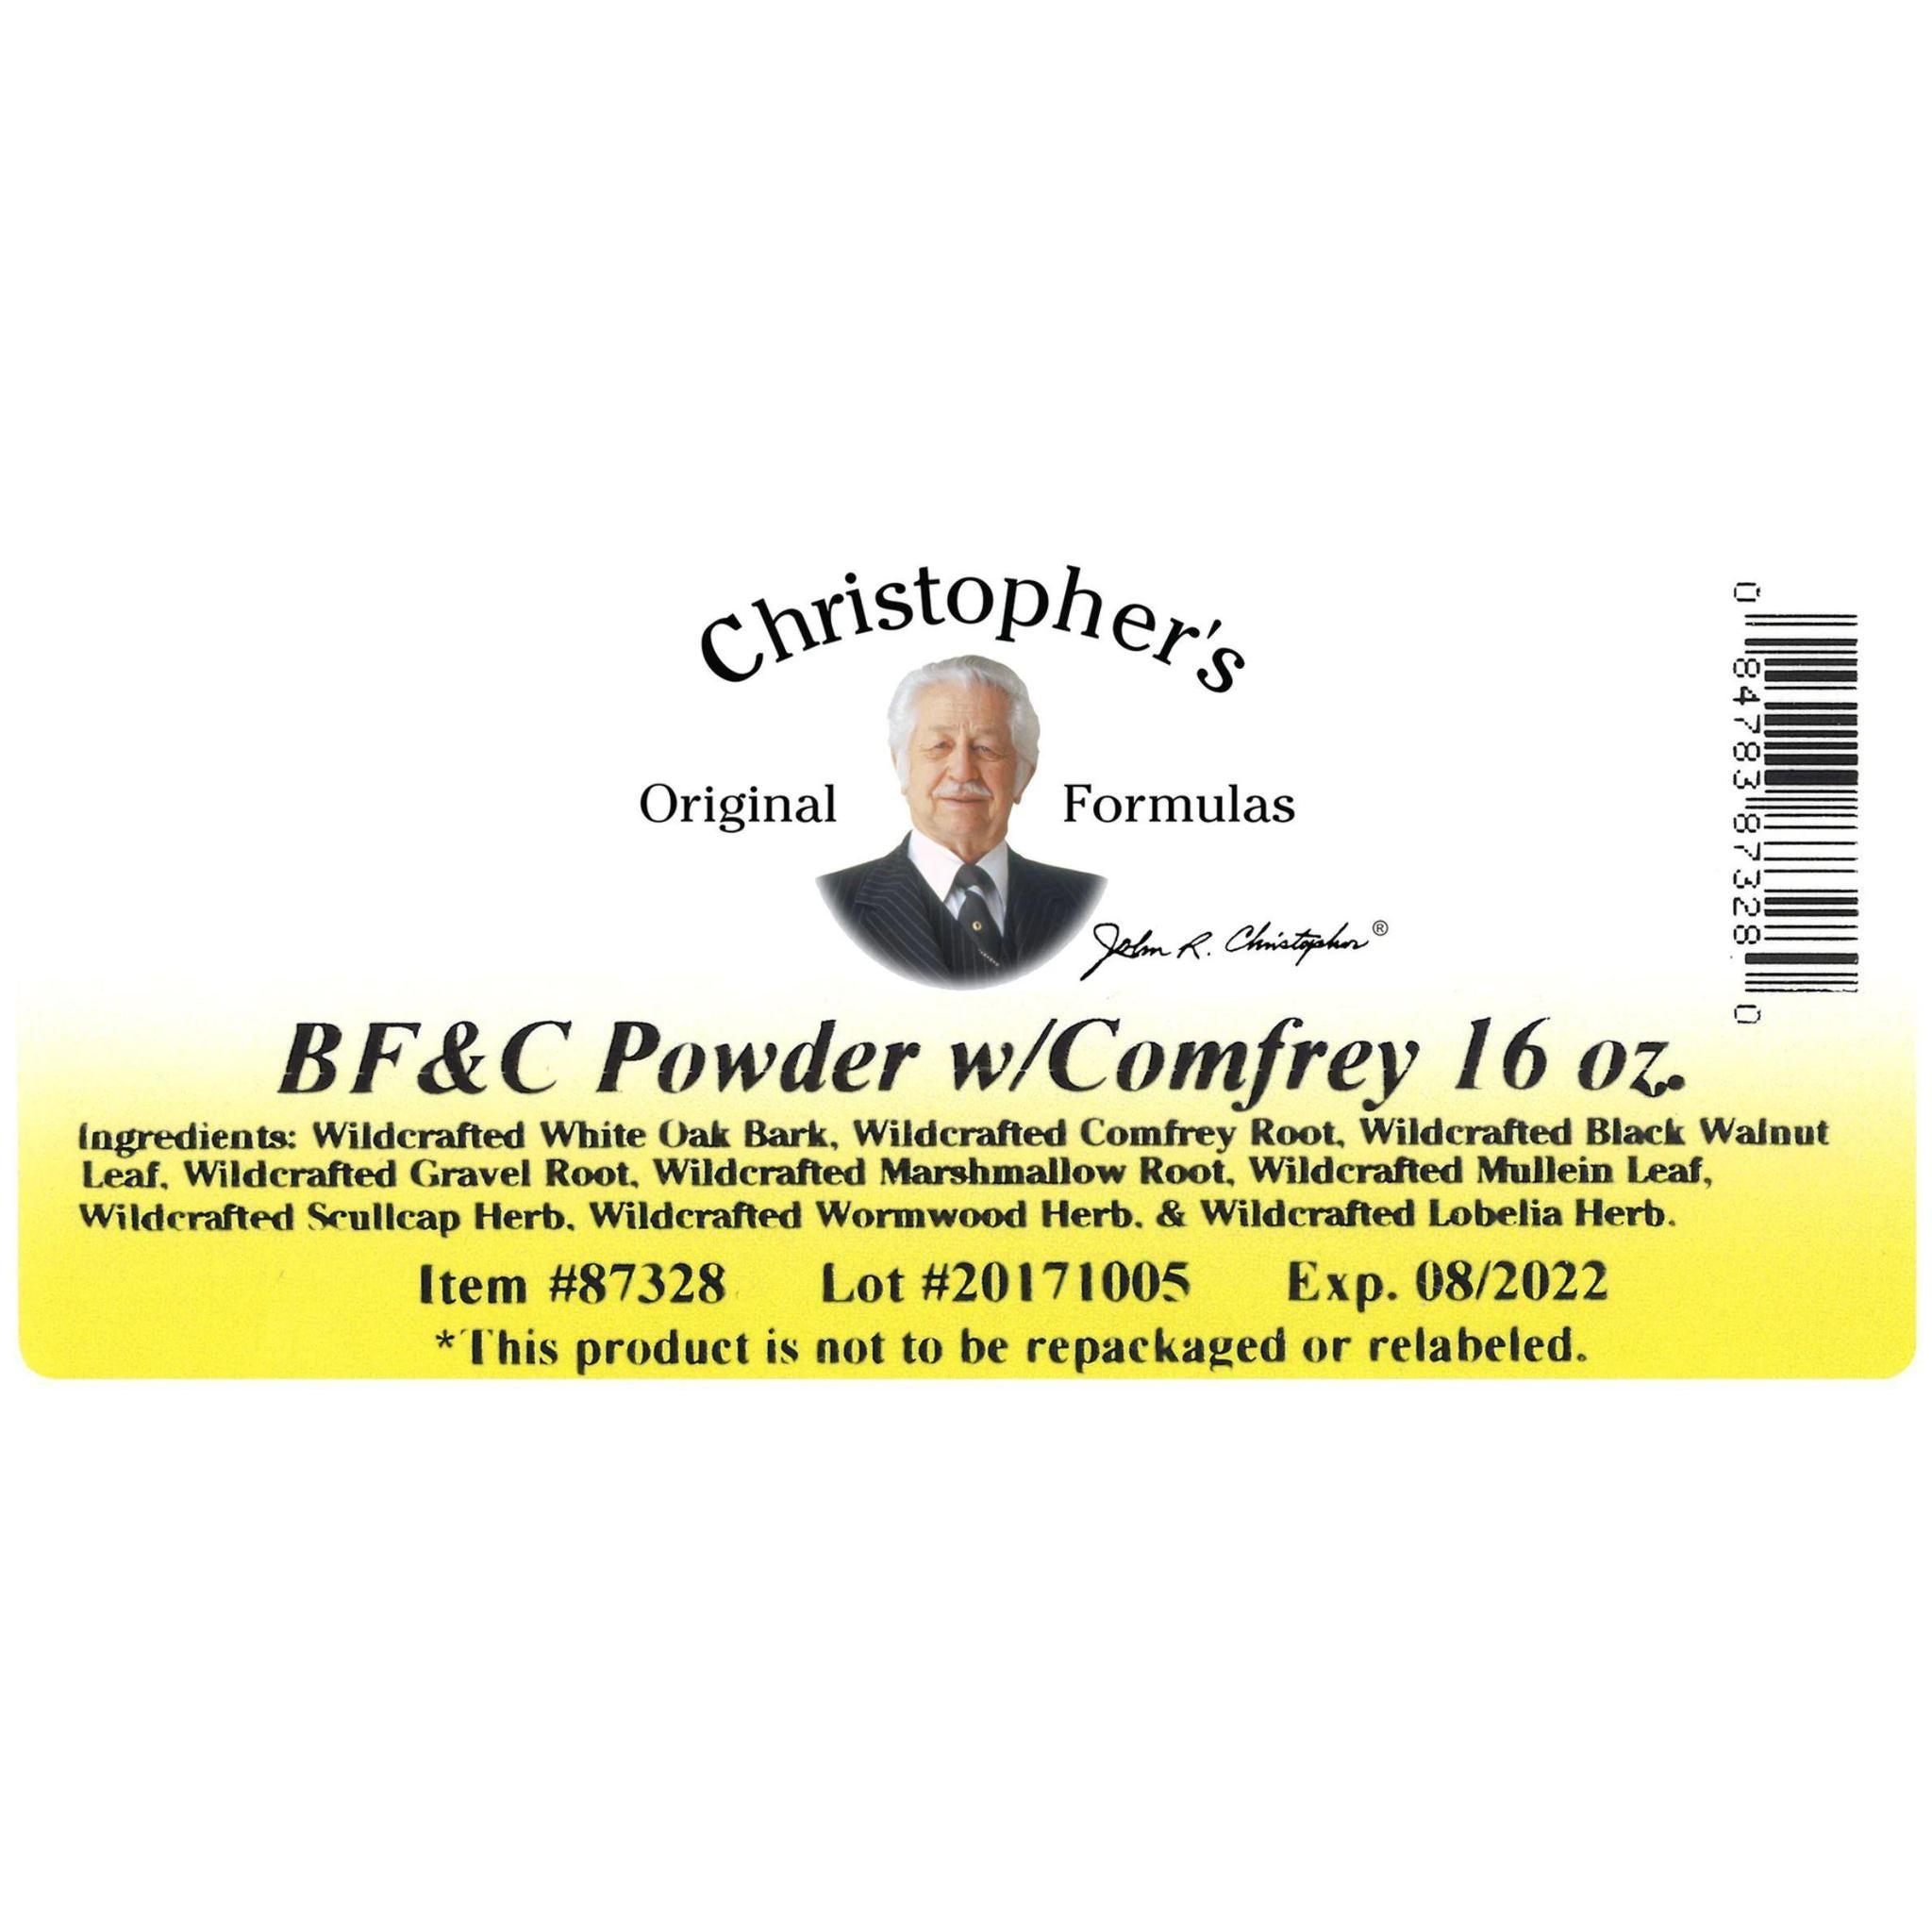 BF&C Powder with Comfrey - 16 oz